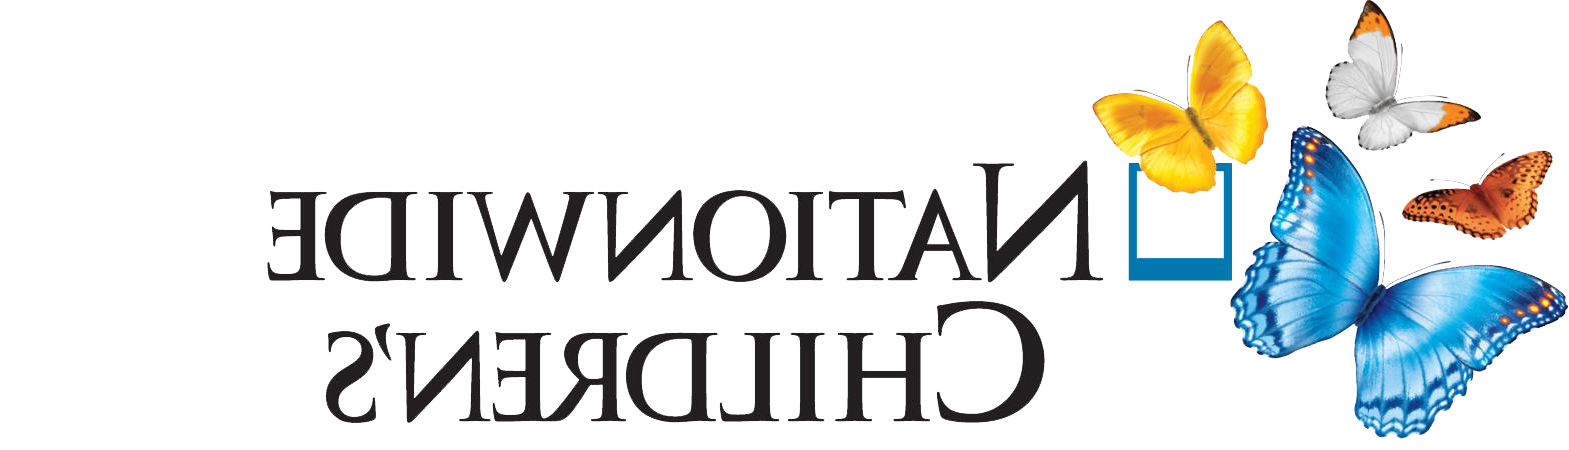 molecular biology nationwide logo